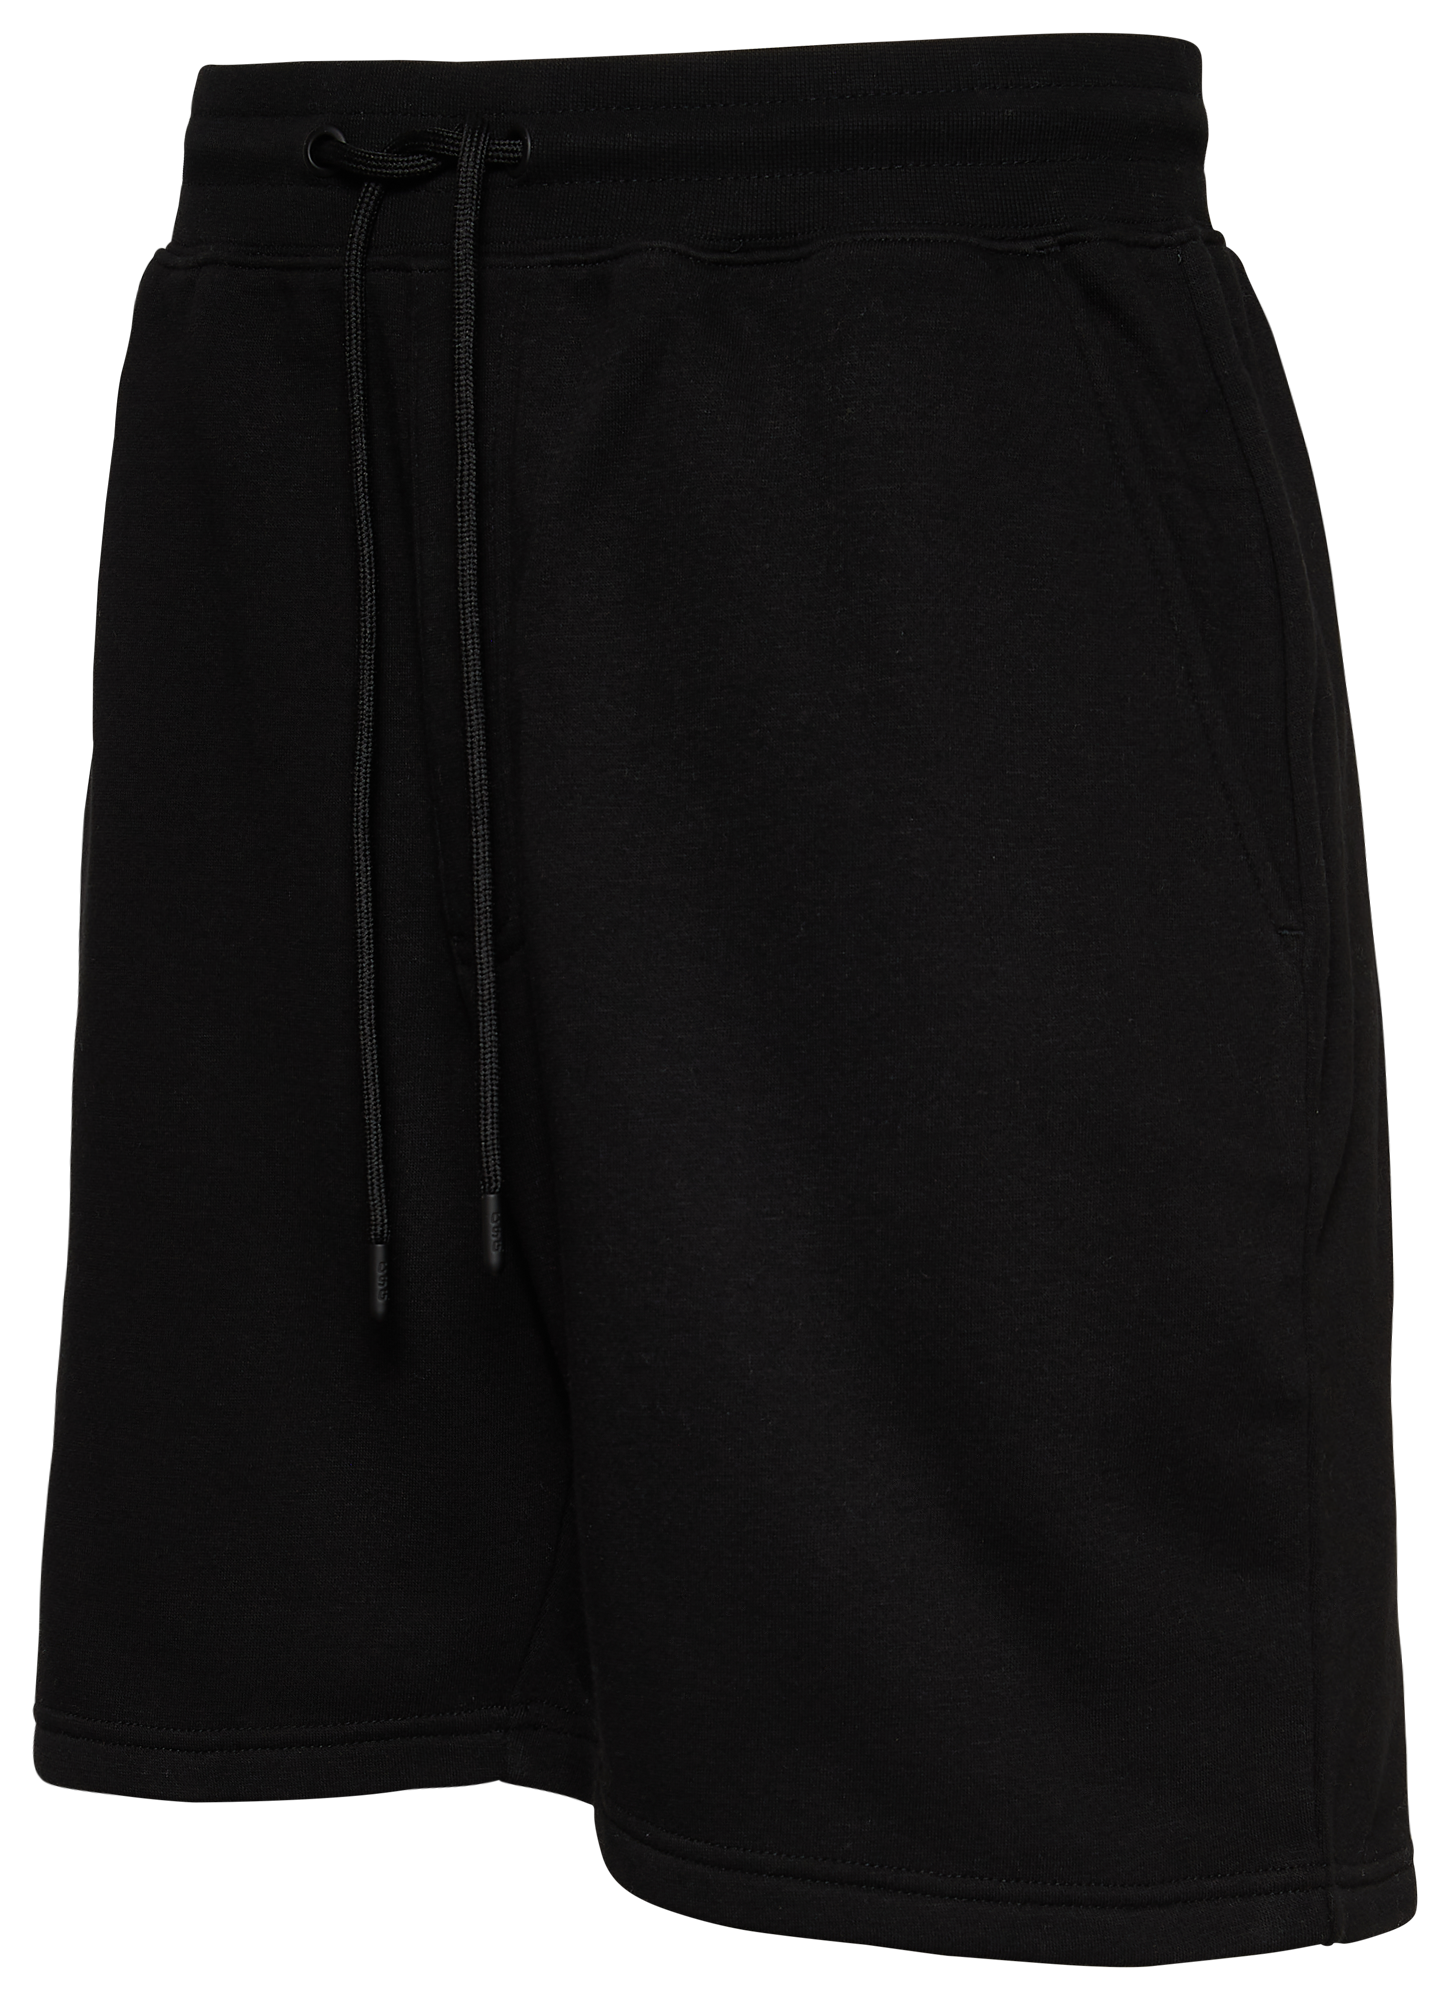 CSG Homeland Fleece Shorts